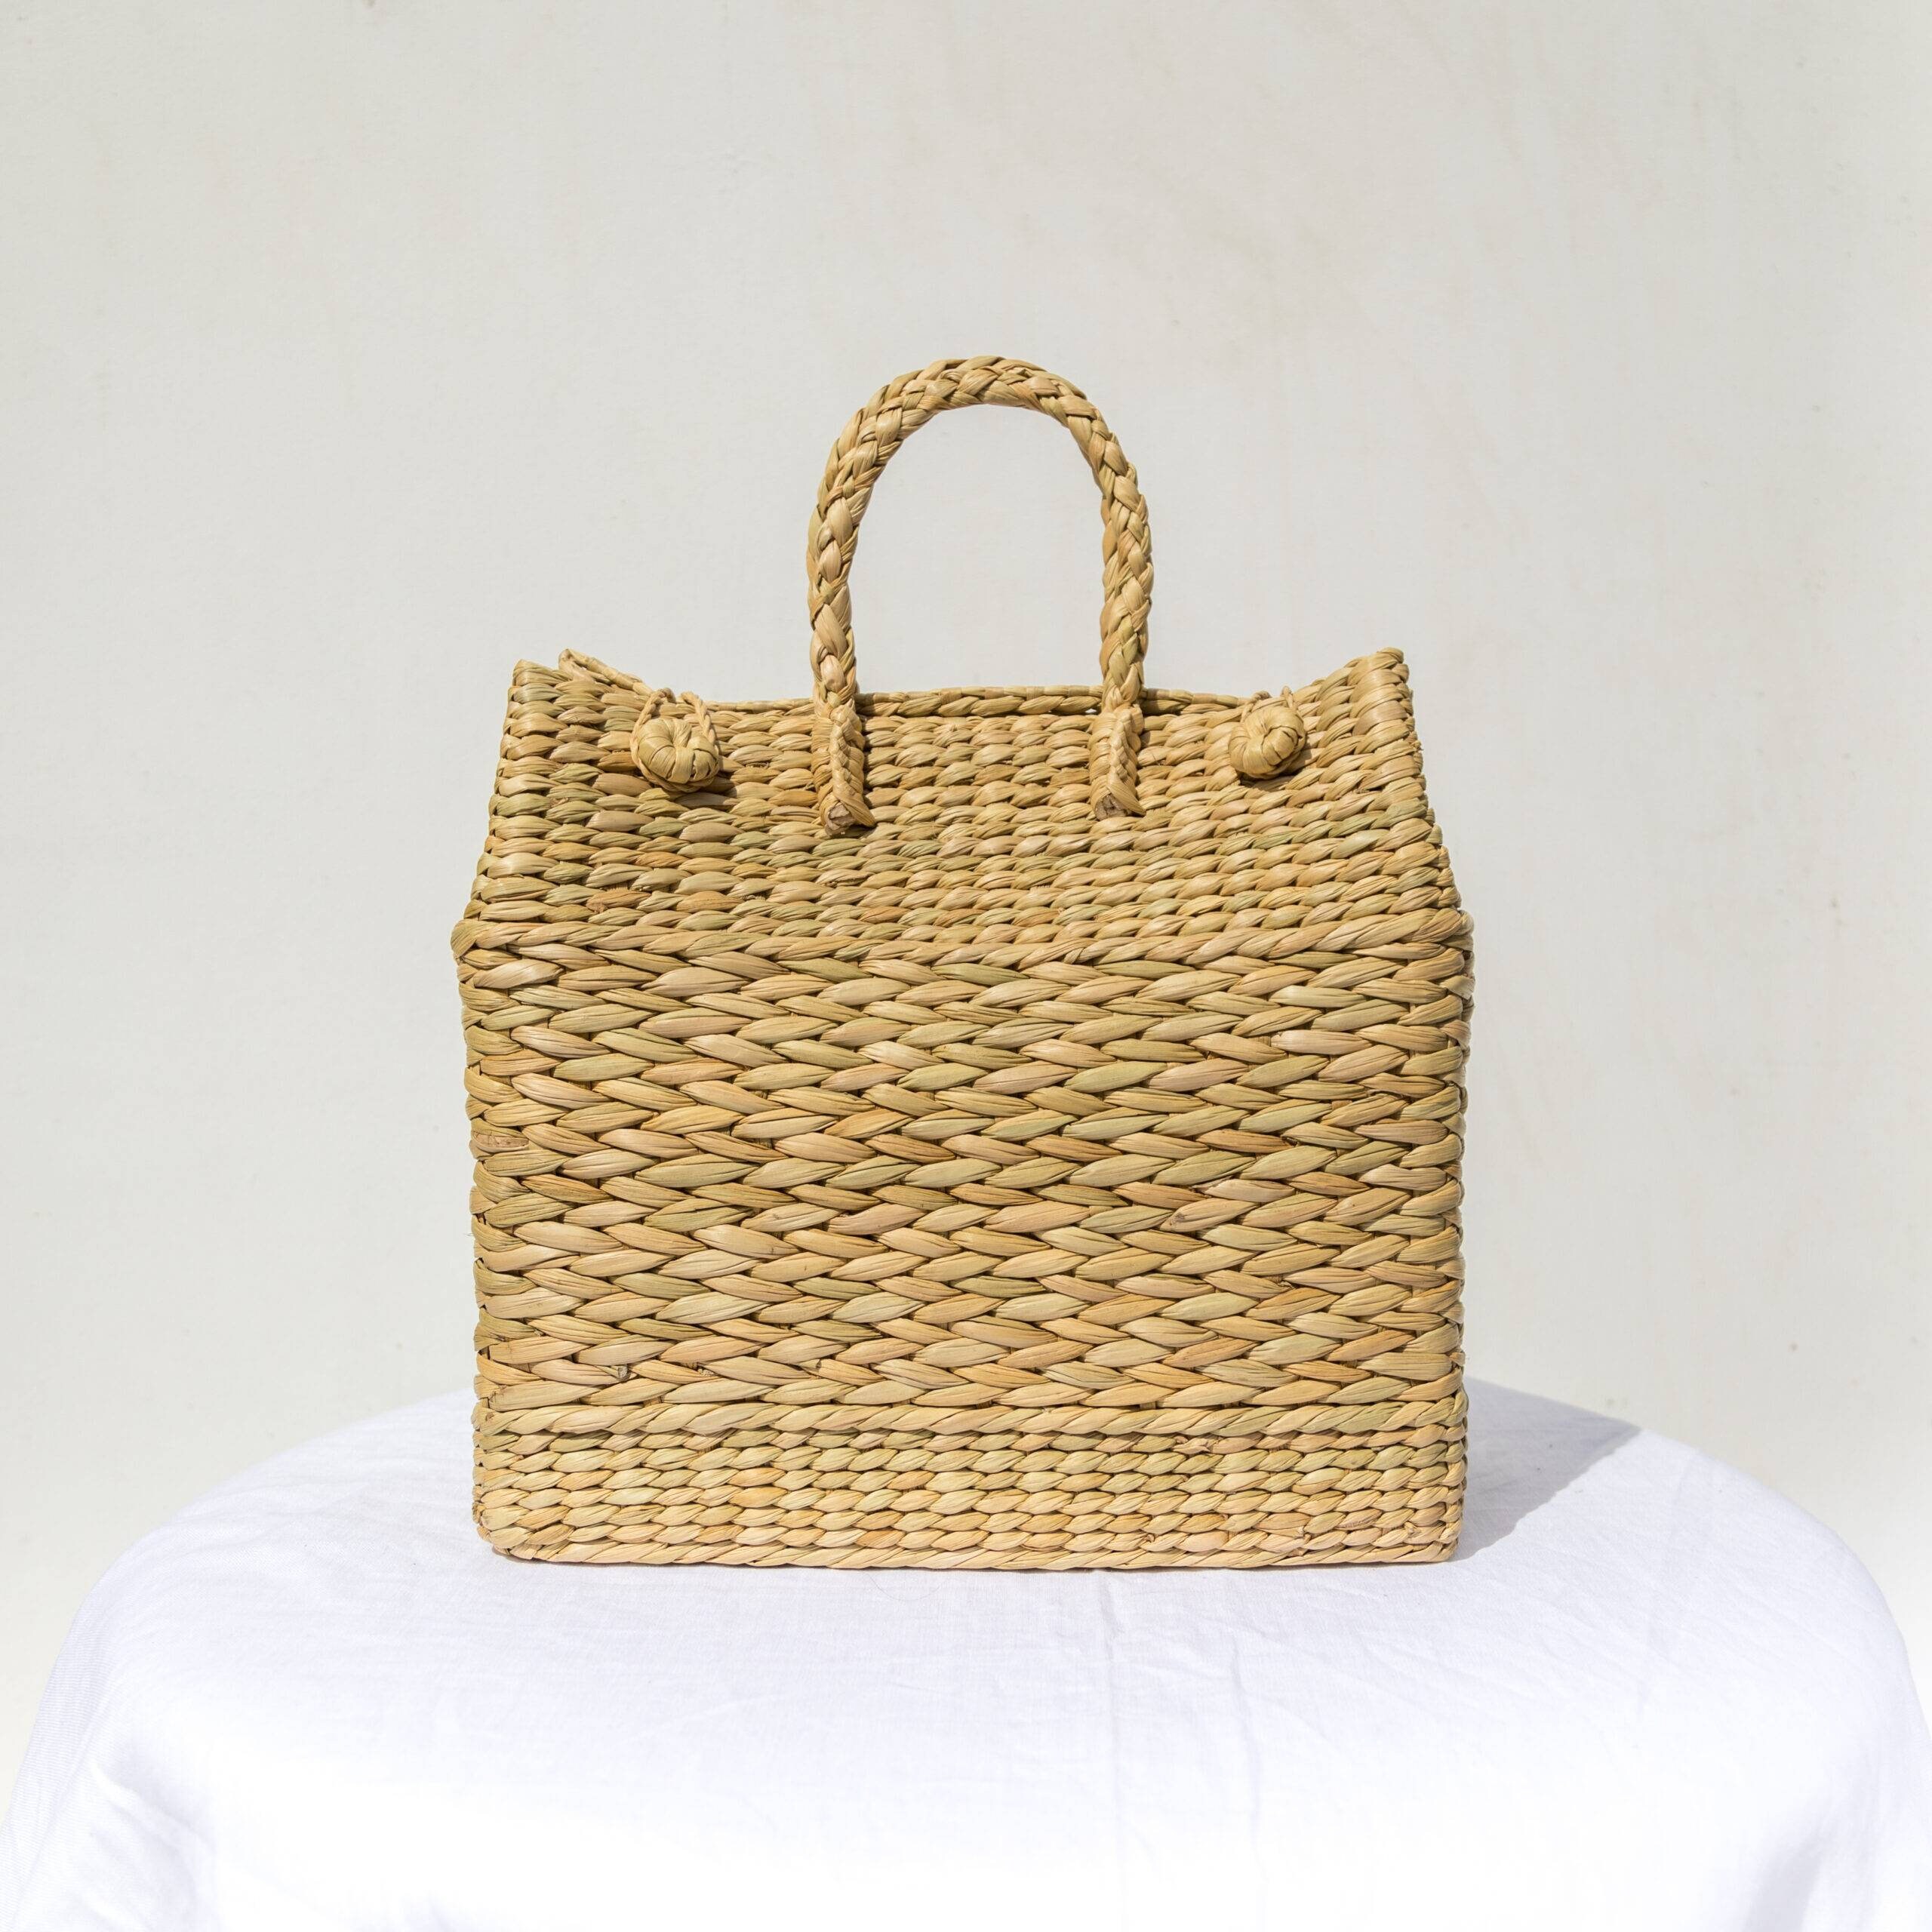 Buy Handcrafted Kauna Grass Tote Bag Online On Zwende